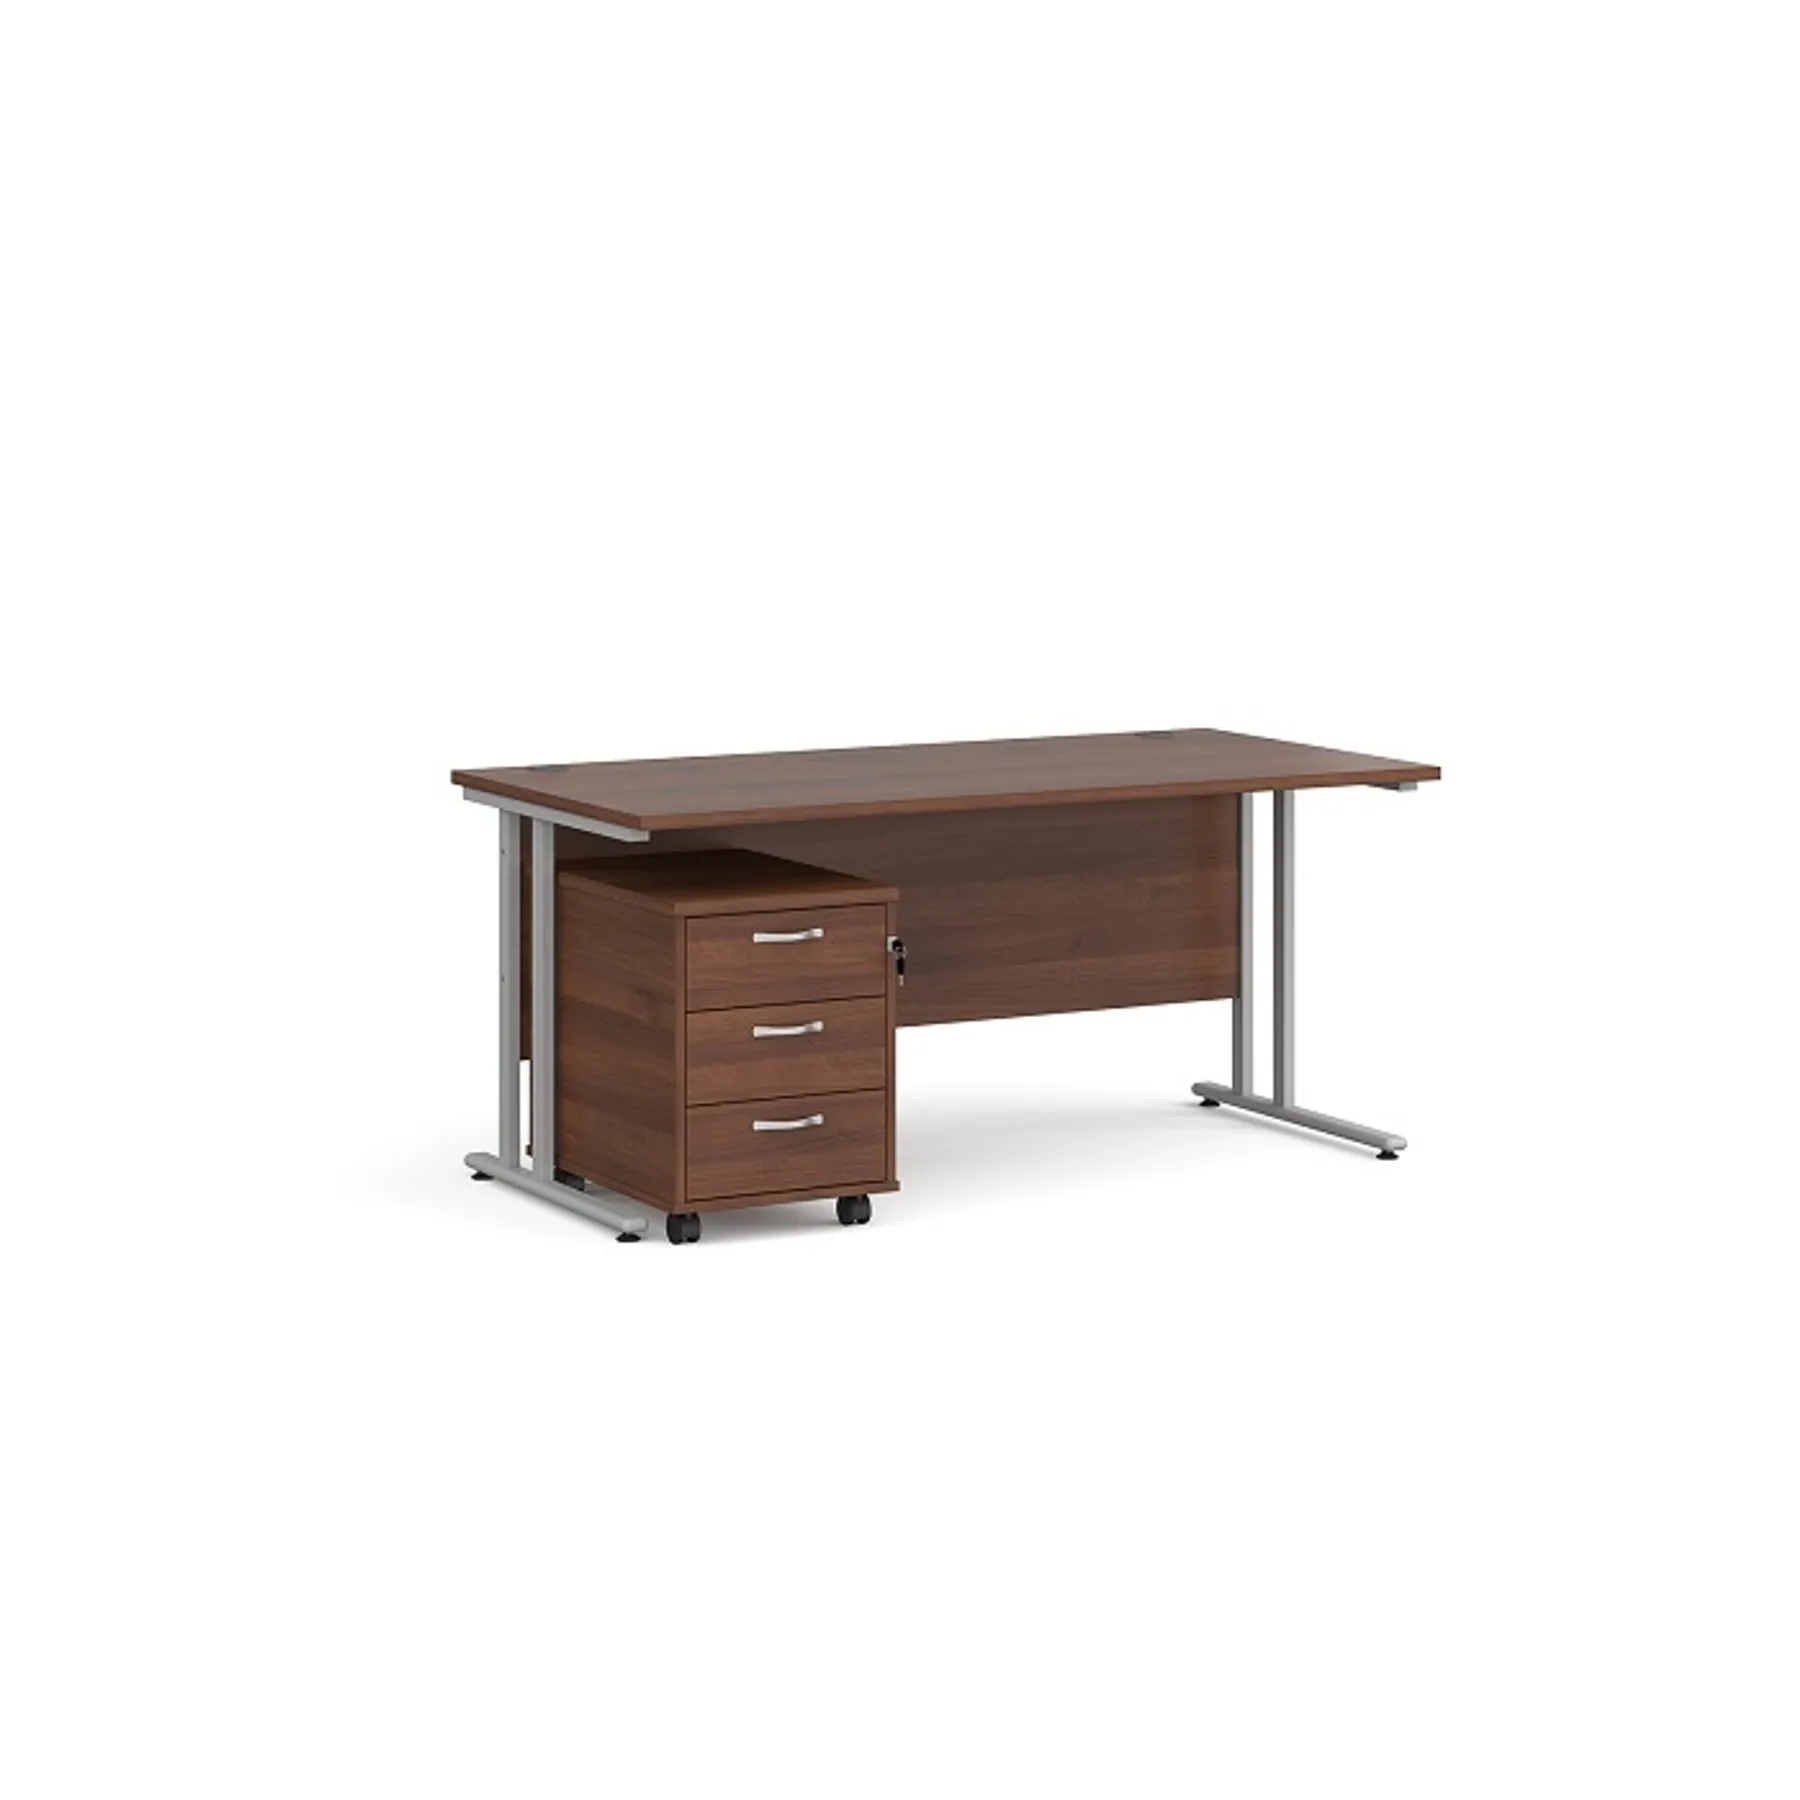 LOF Direct Dams straight desk with mobile pedestal bundle 2 drawer walnut office furniture